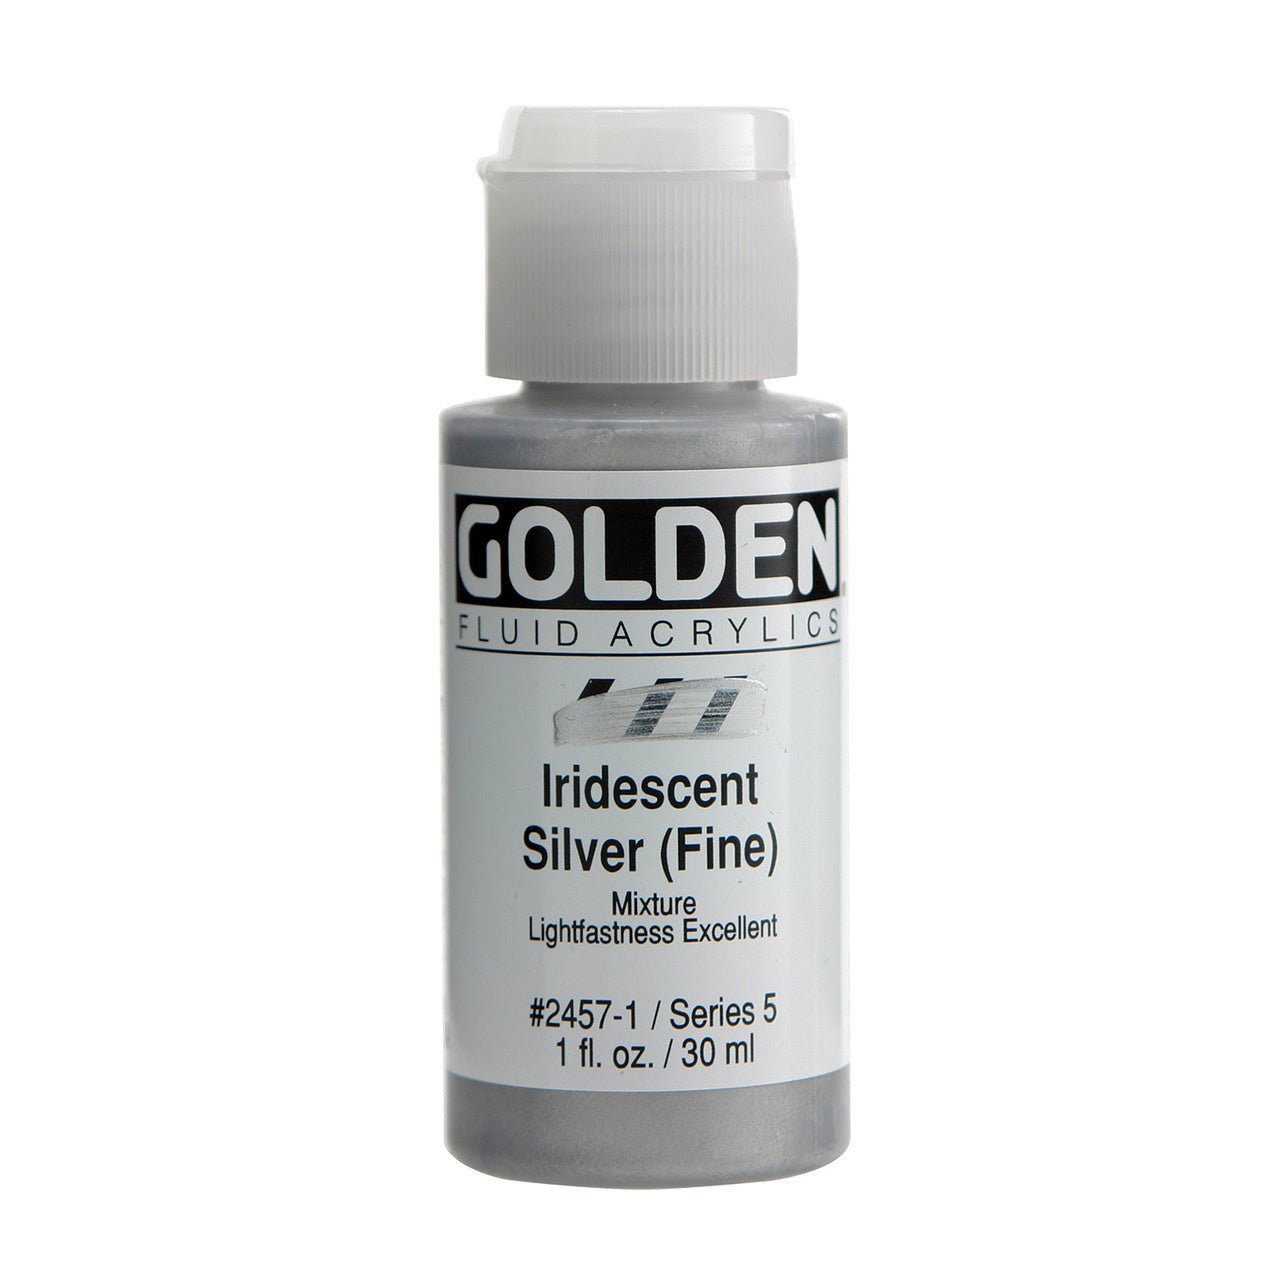 Golden Fluid Acrylic Iridescent Silver (fine) 1 oz - merriartist.com